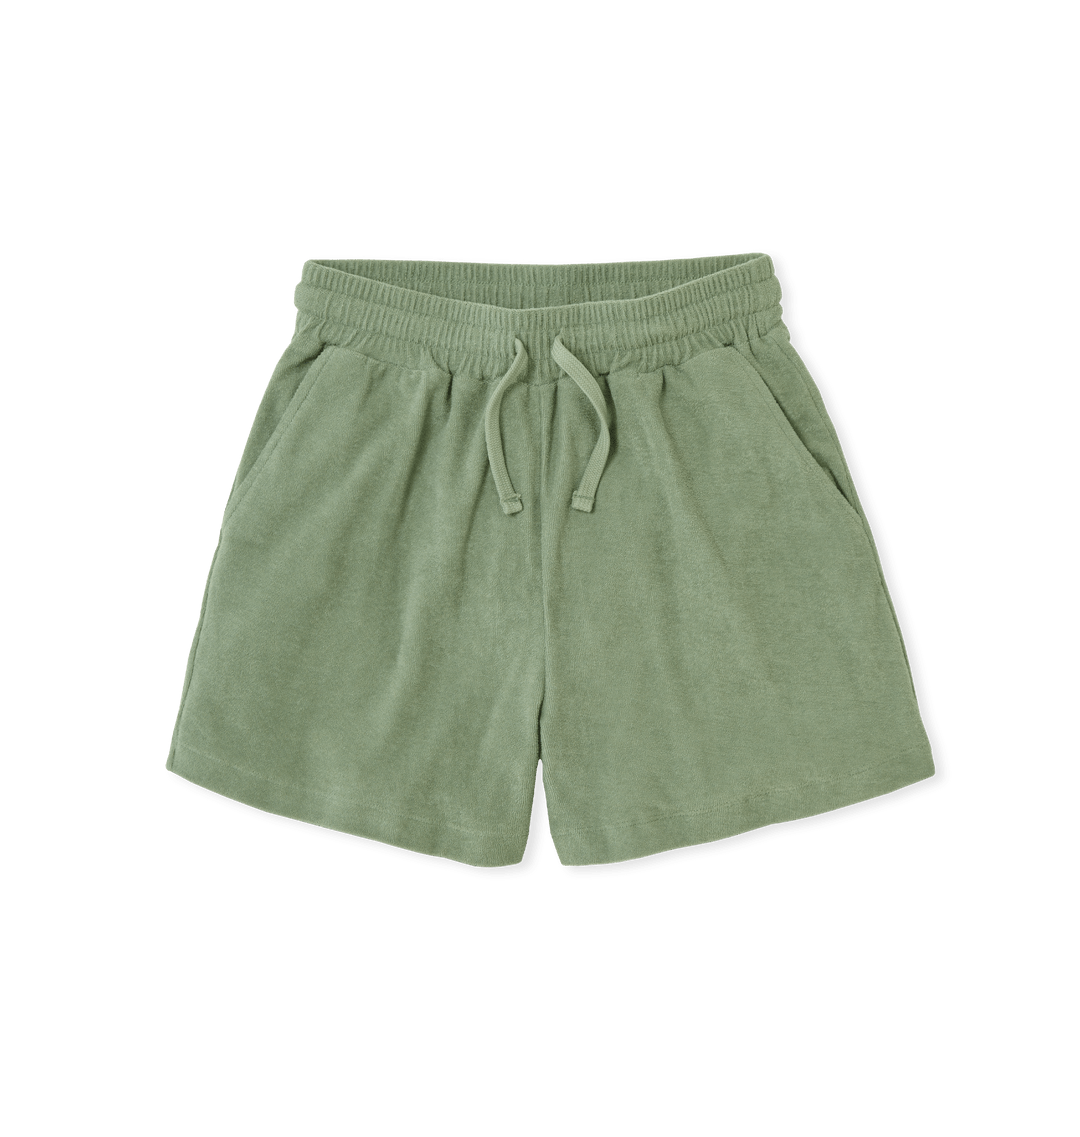 Women's Cove Towelling Shorts - Shorts